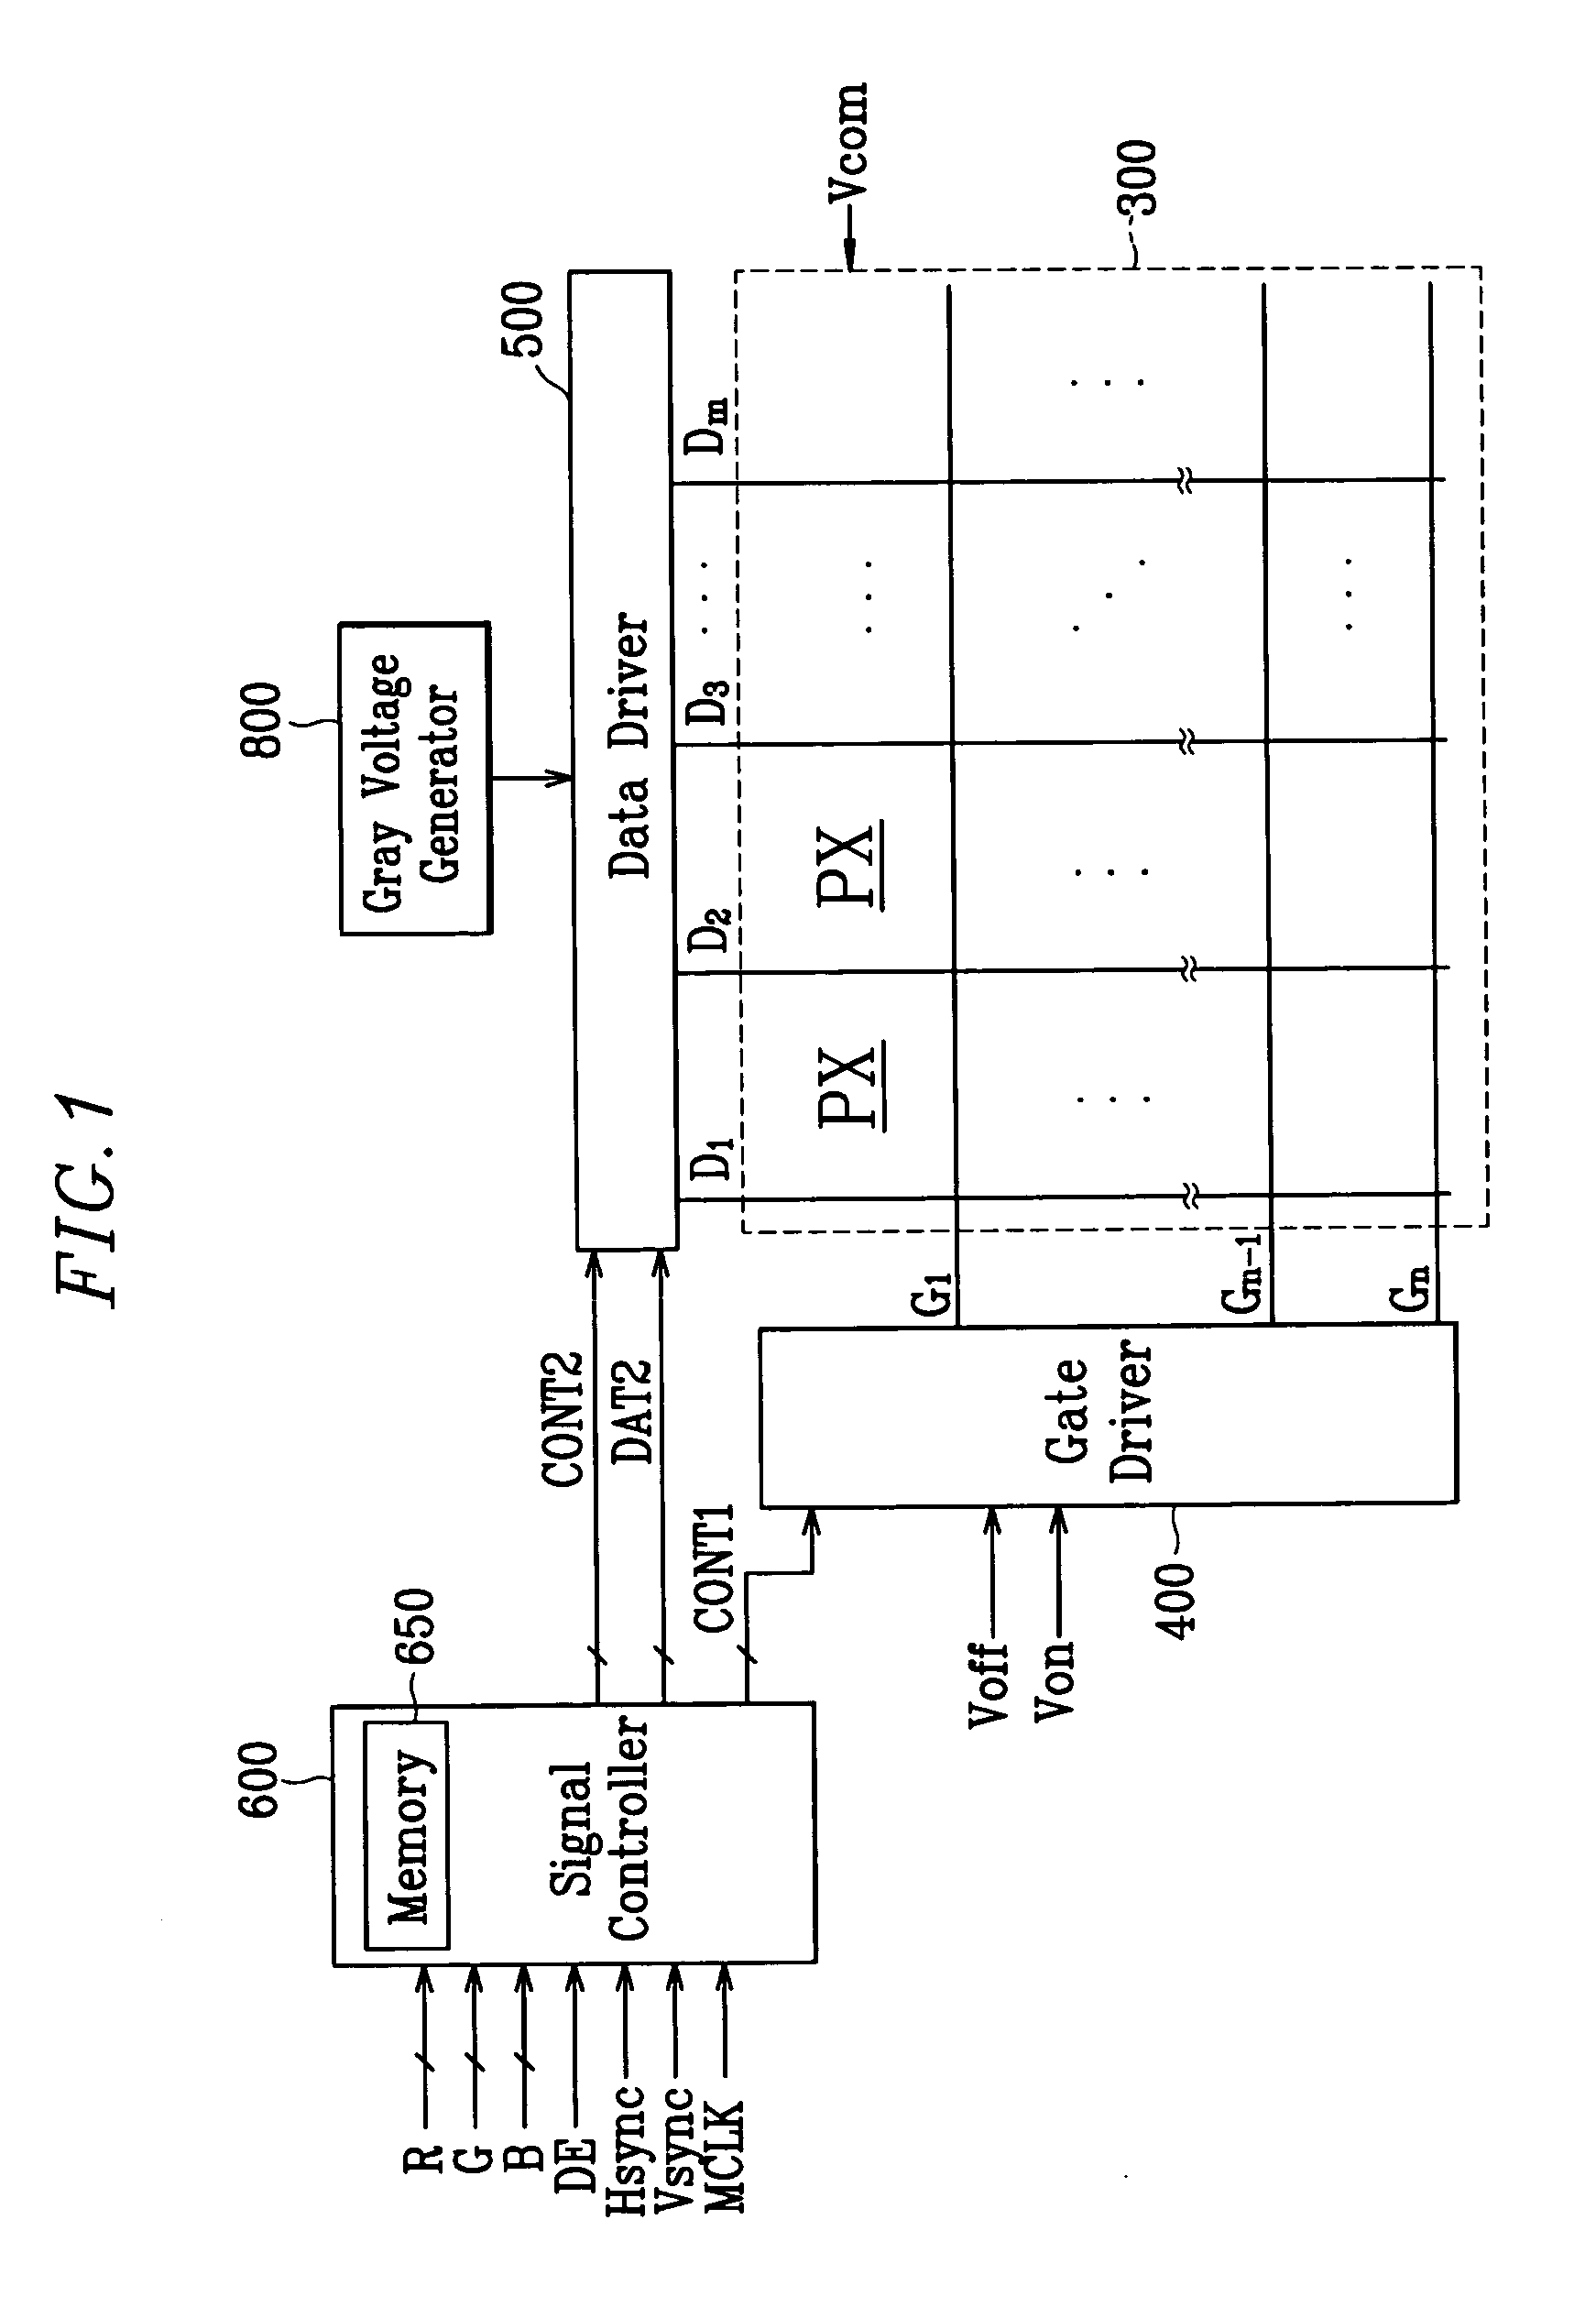 Apparatus and method of driving liquid crystal display apparatus